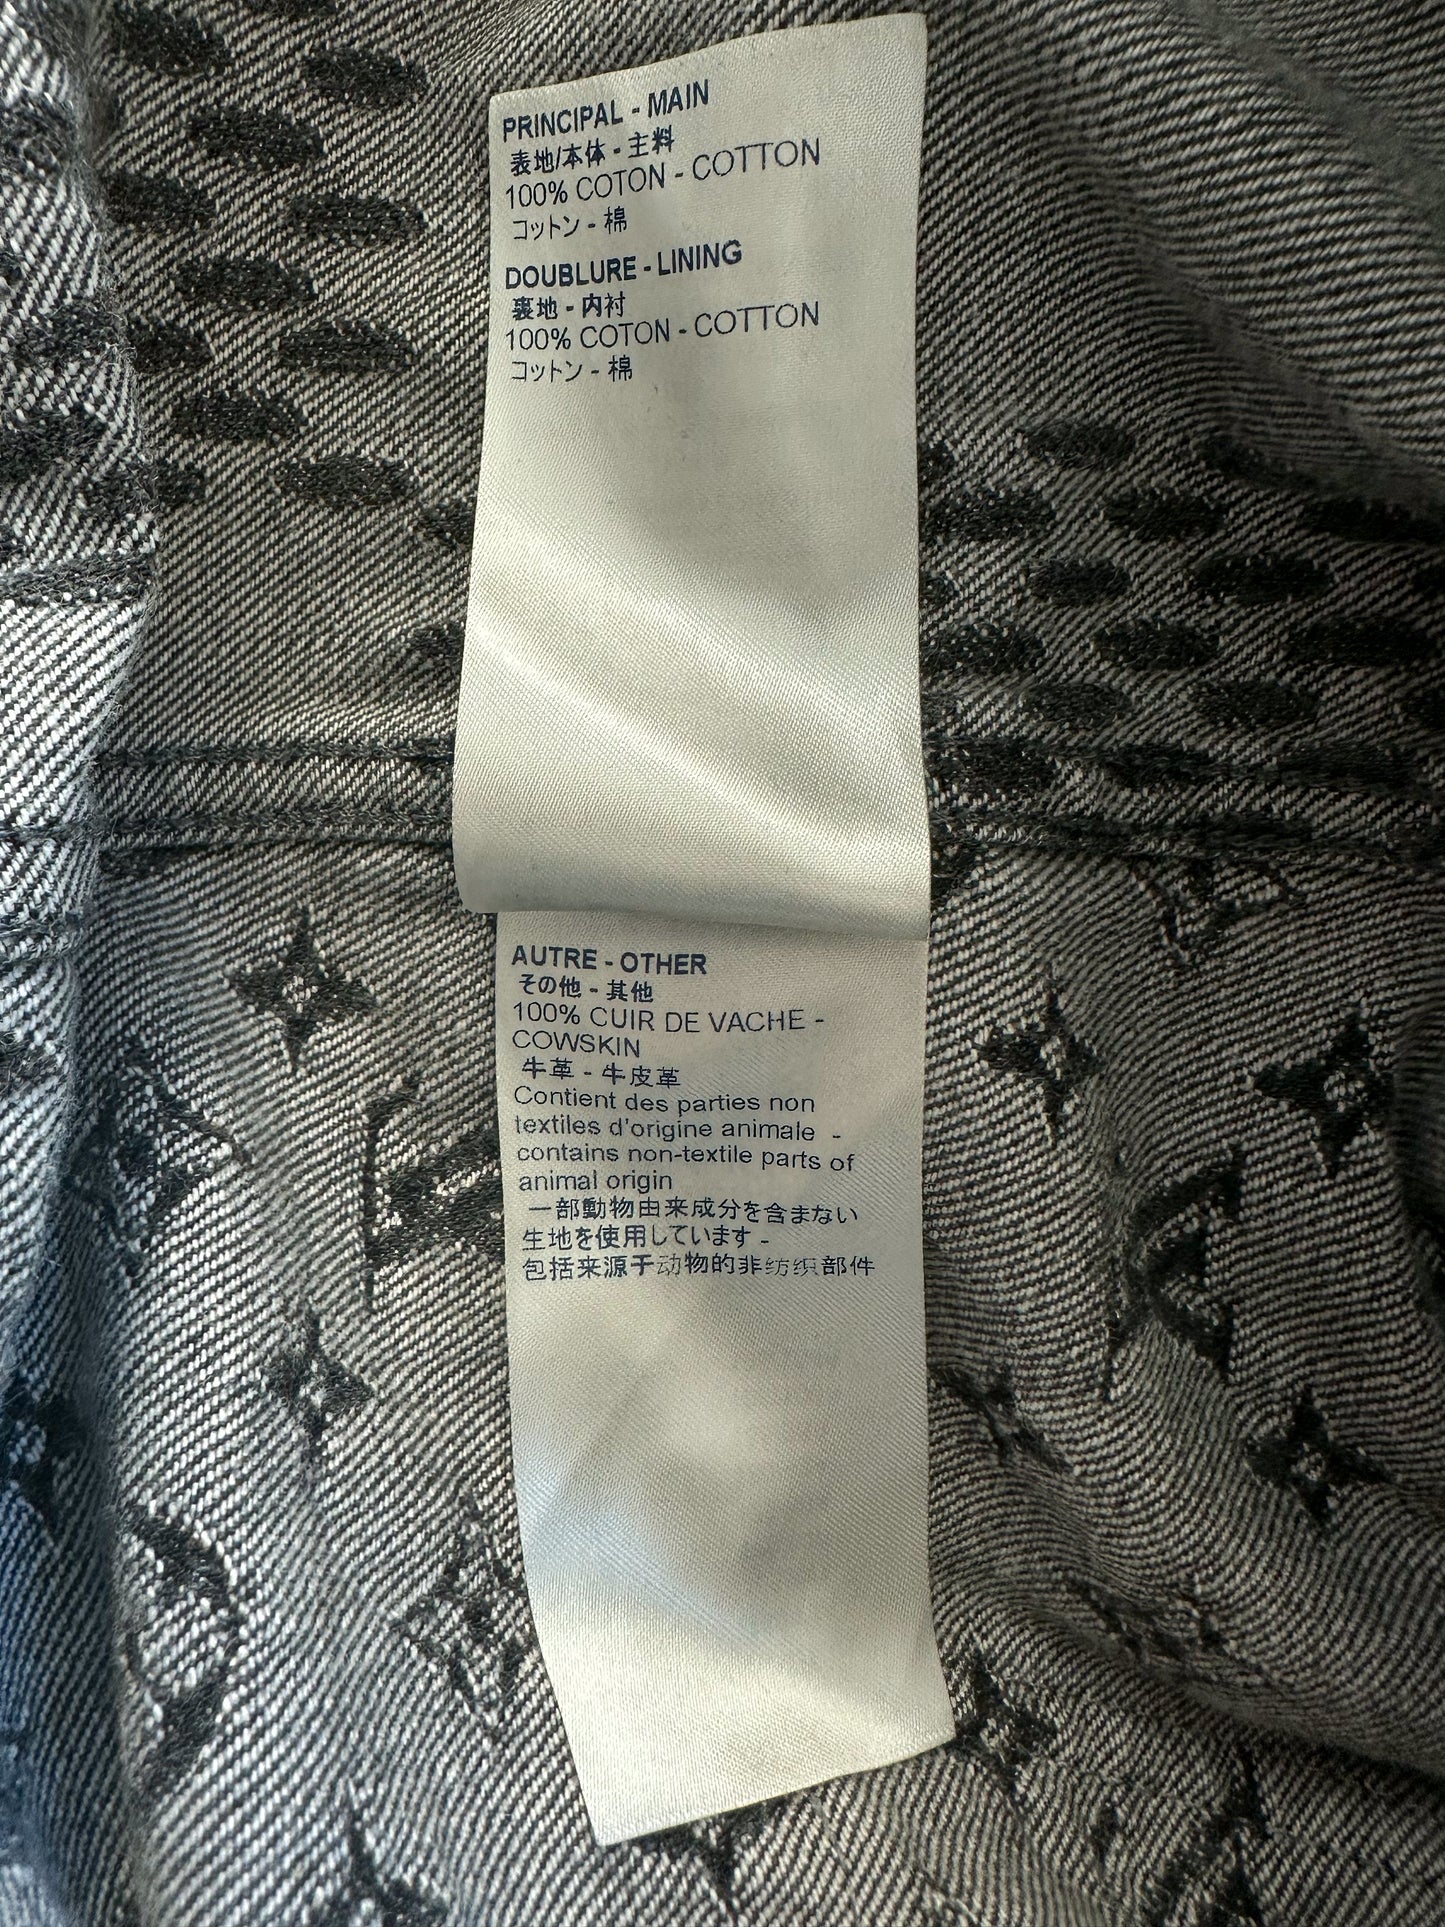 Louis Vuitton Nigo Giant Waves Monogram Denim Jacket